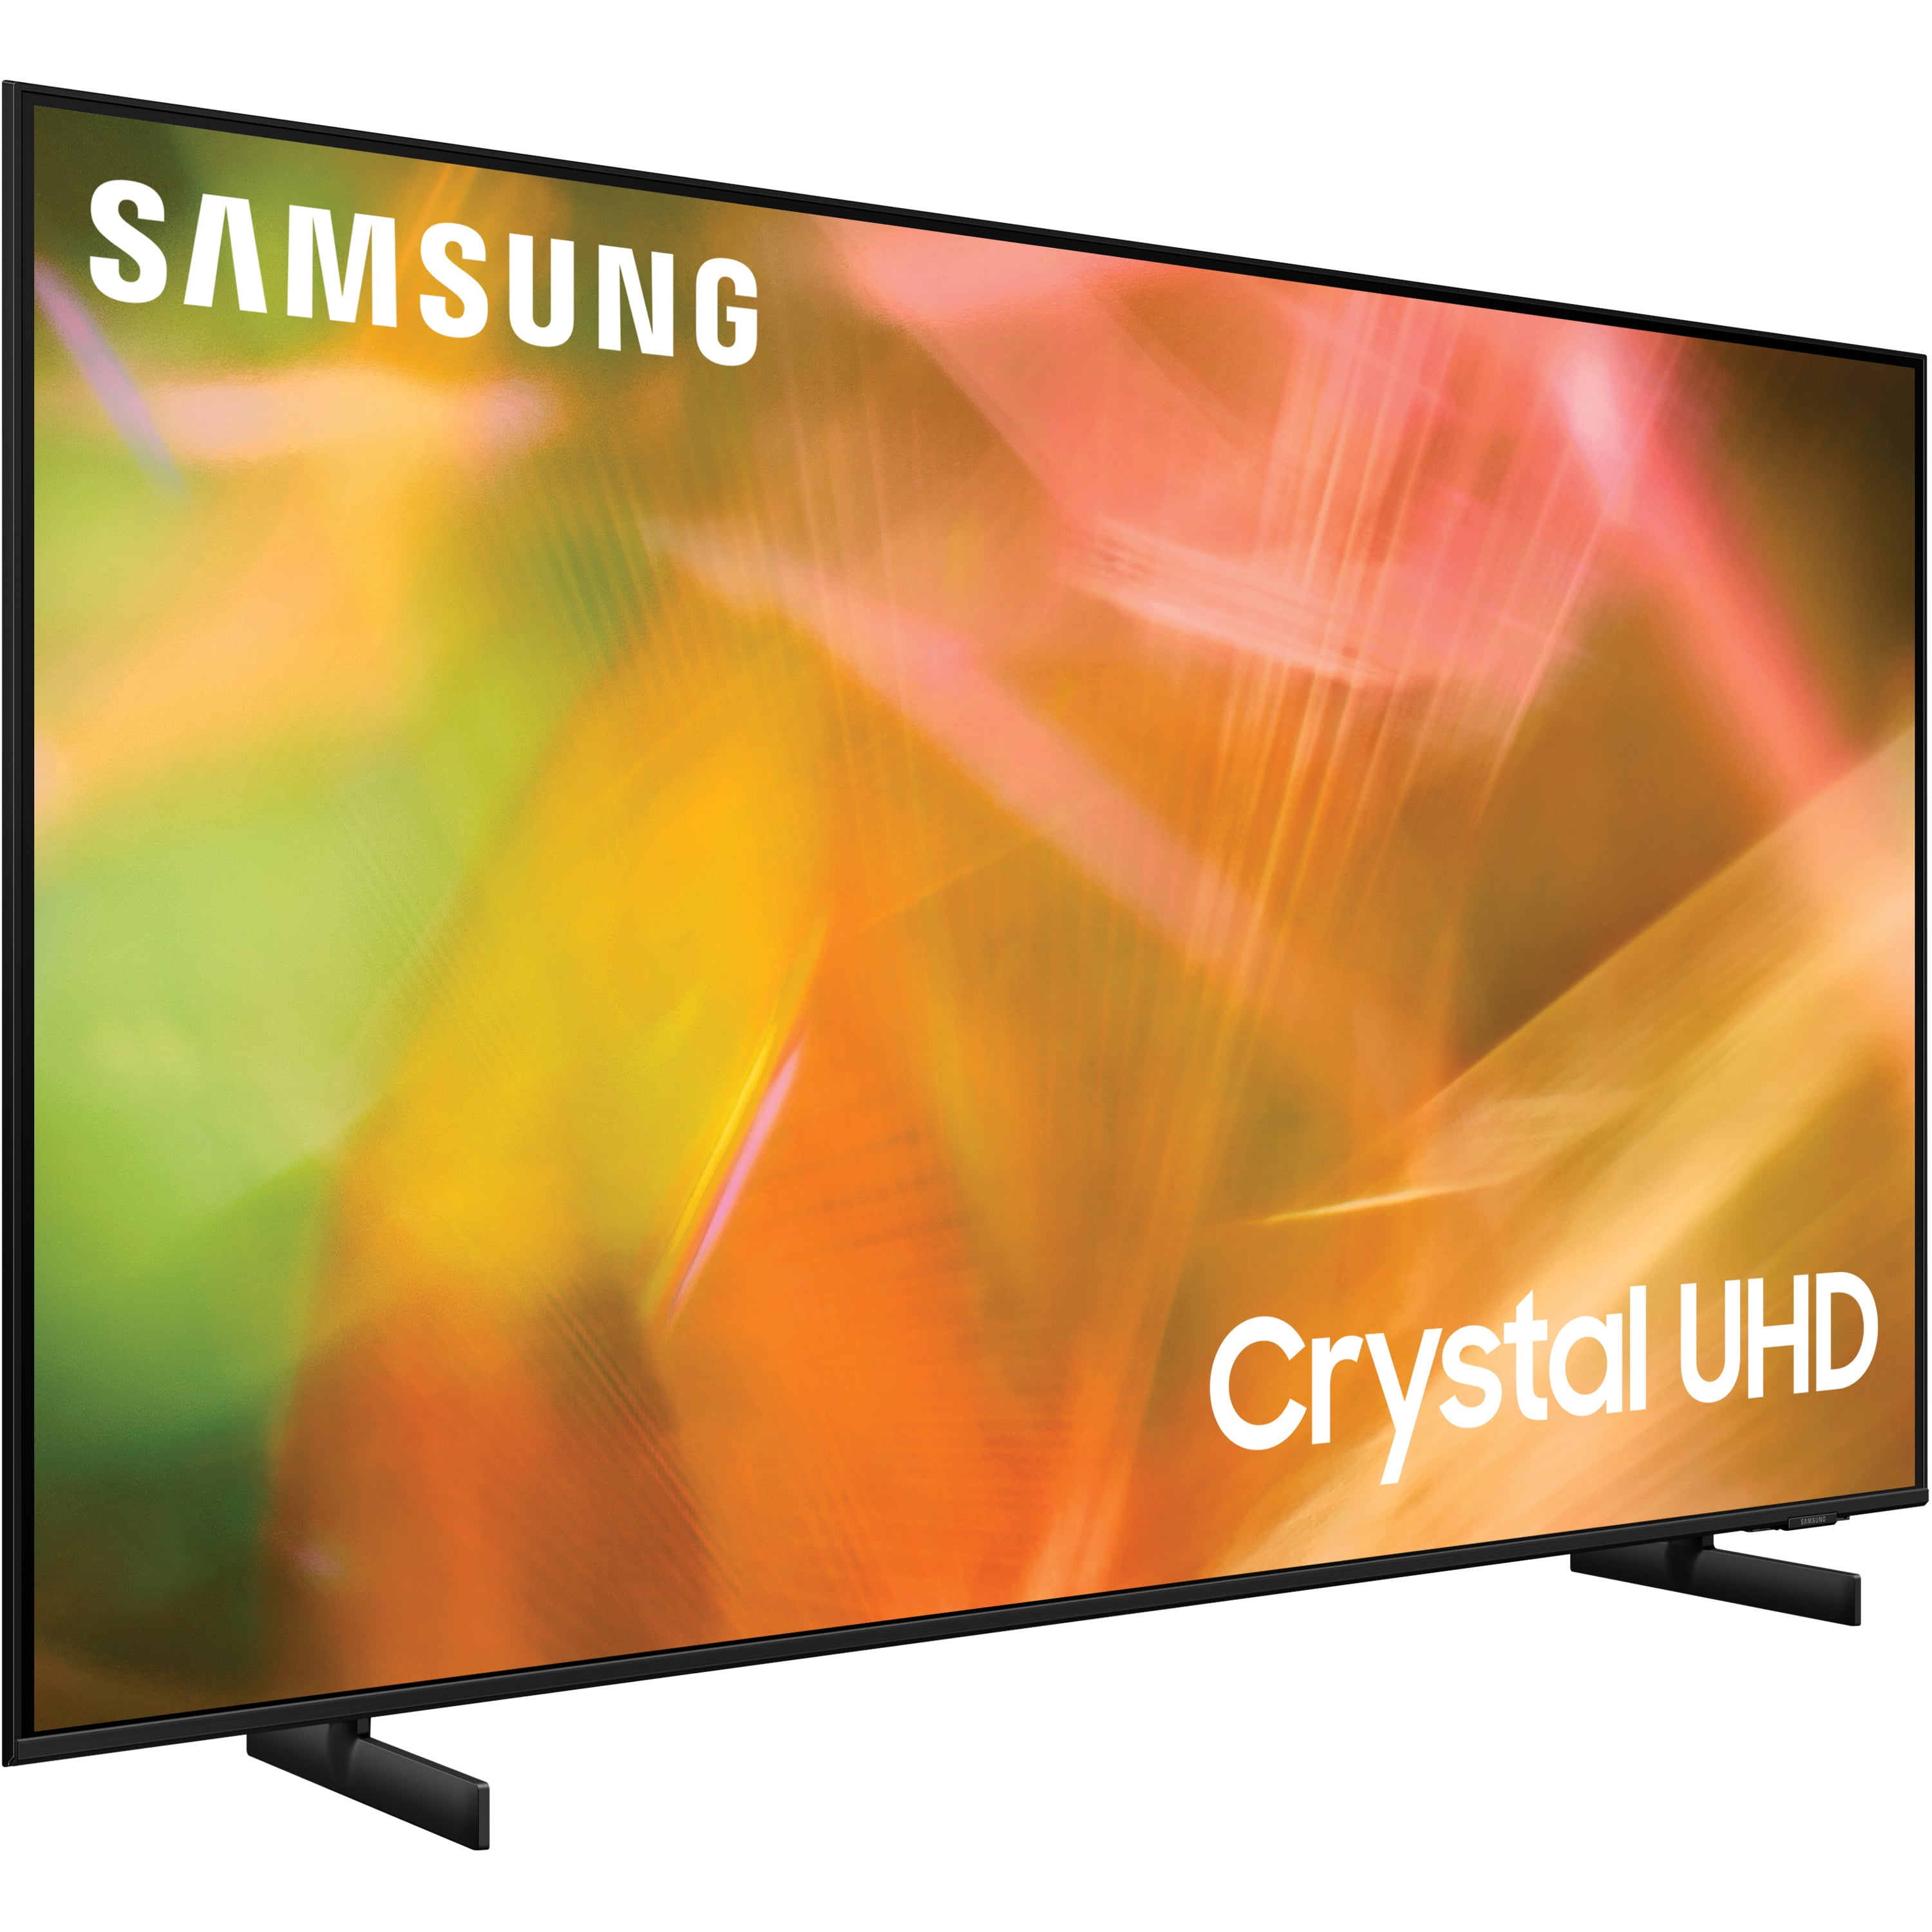 Storing wimper Anemoon vis Samsung 43" Class 4K Crystal UHD (2160p) LED Smart TV with HDR UN43AU8000  2021 - Walmart.com